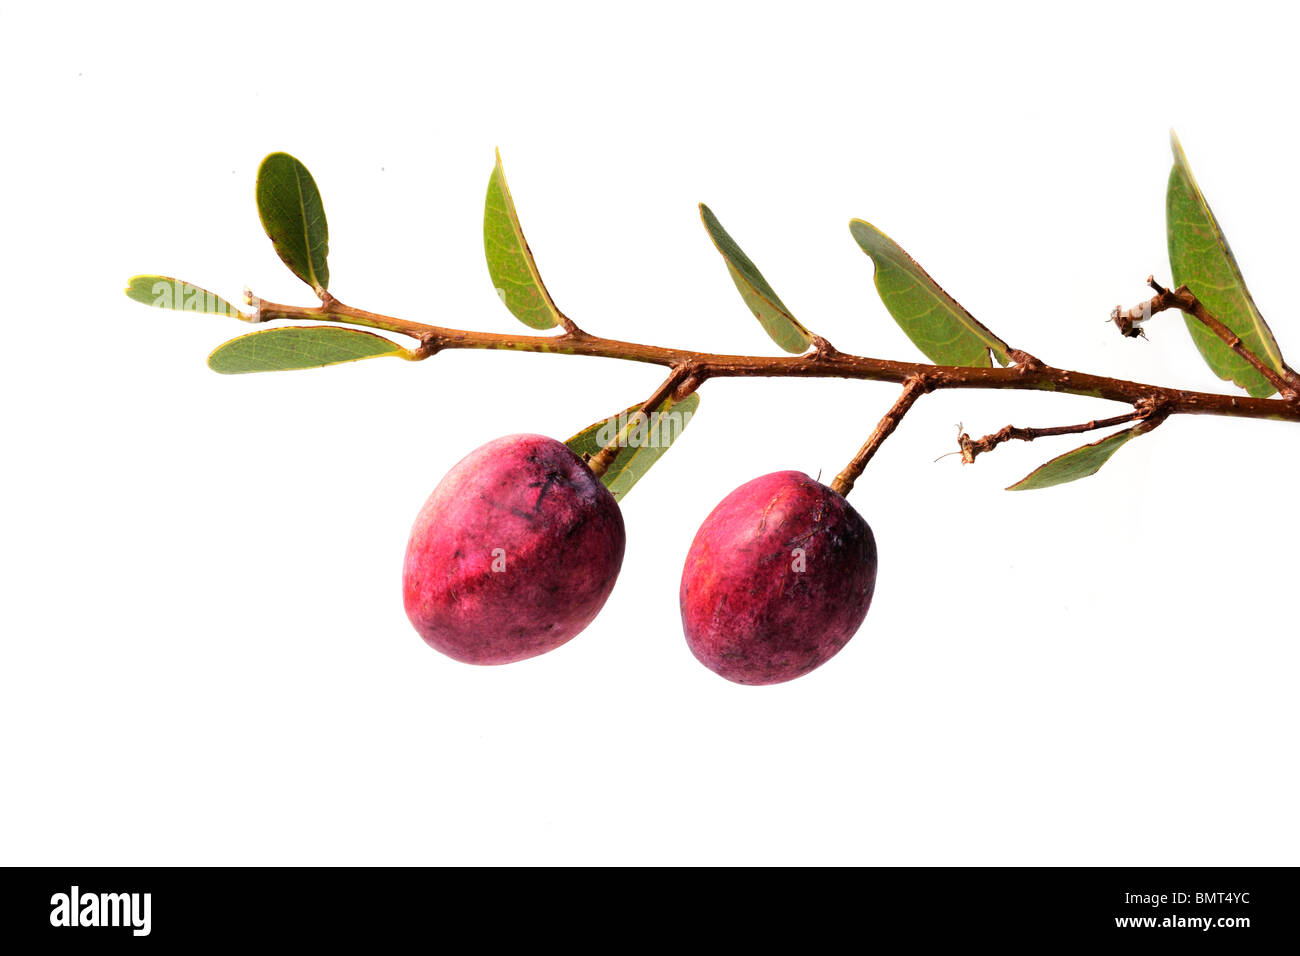 Cocoplum - Guajuru (Chrysobalanus icaco) - fruit and leaves on white background Stock Photo